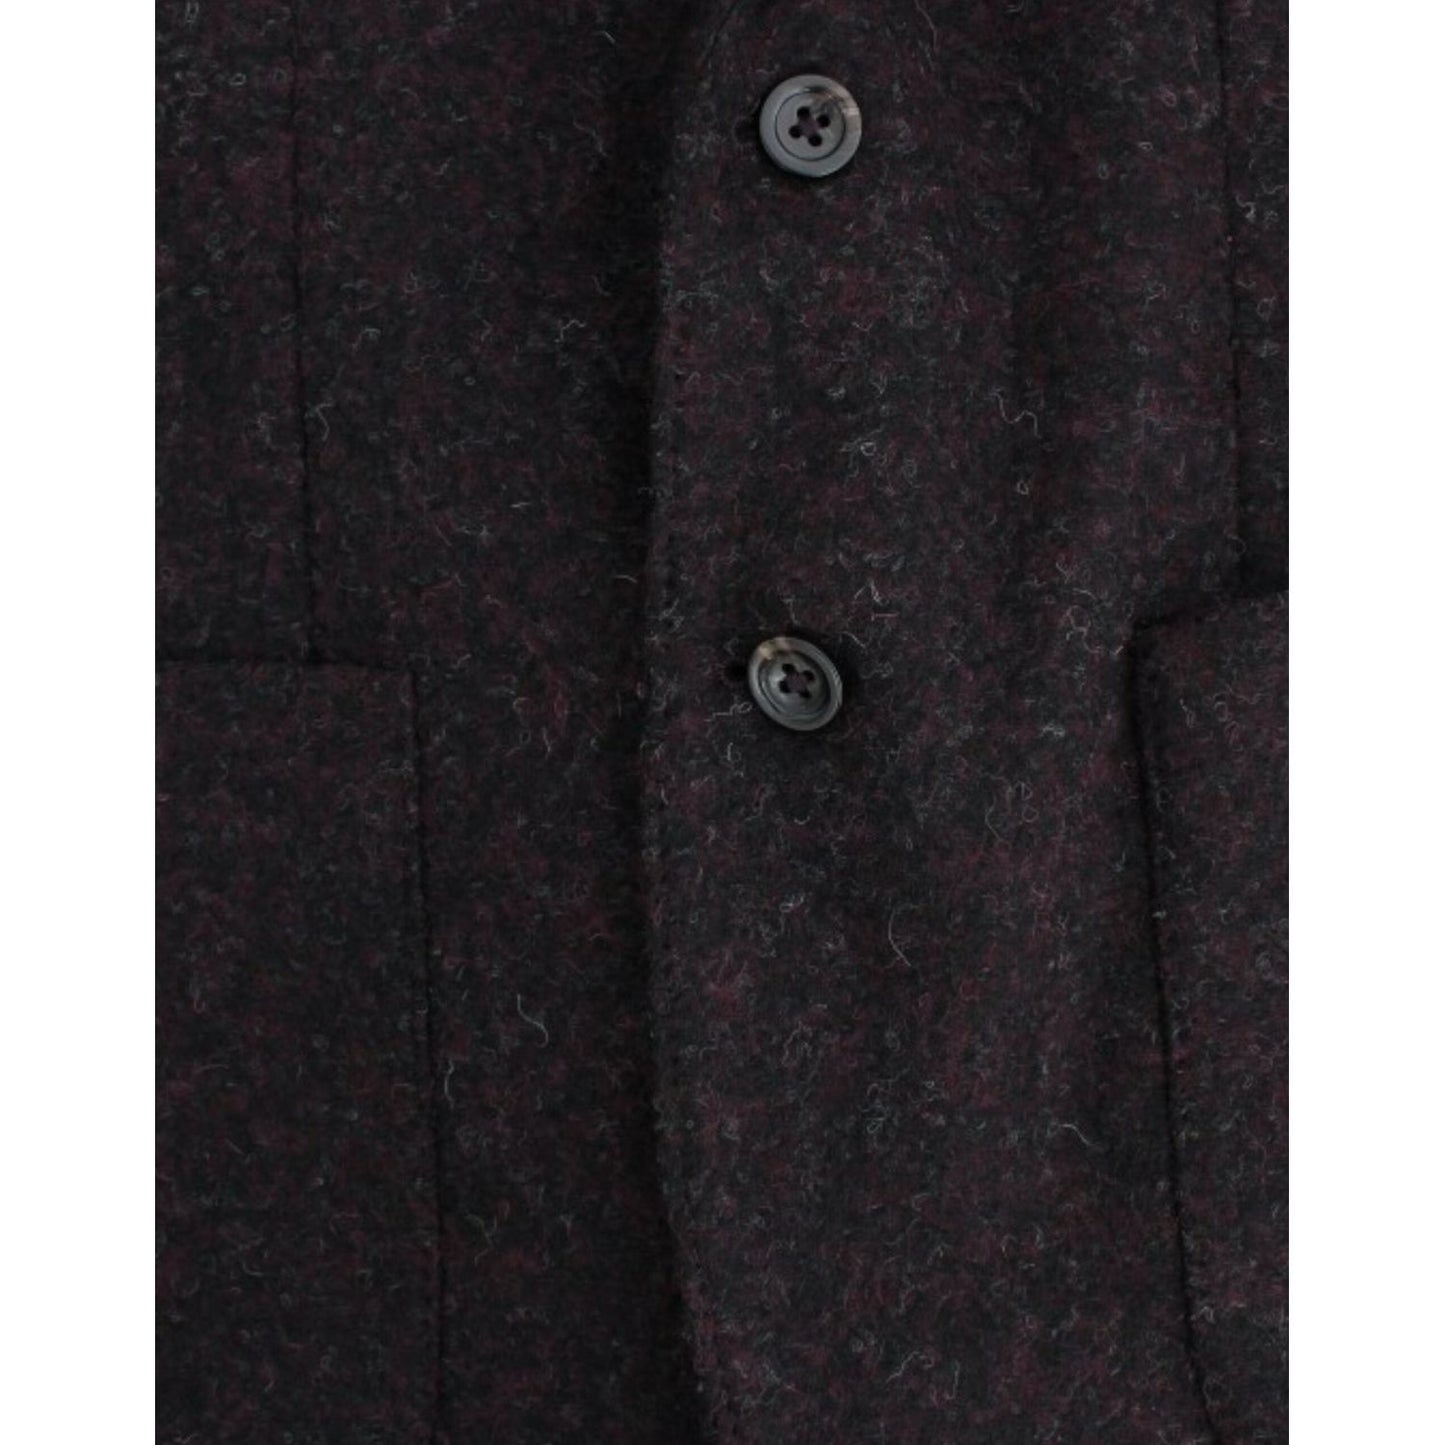 Dolce & Gabbana Bordeaux Alpaga Two-Button Blazer Jacket bordeaux-alpaga-two-button-blazer 12462-bordeaux-alpaga-two-button-blazer-8-scaled-1eb37c1f-951.jpg